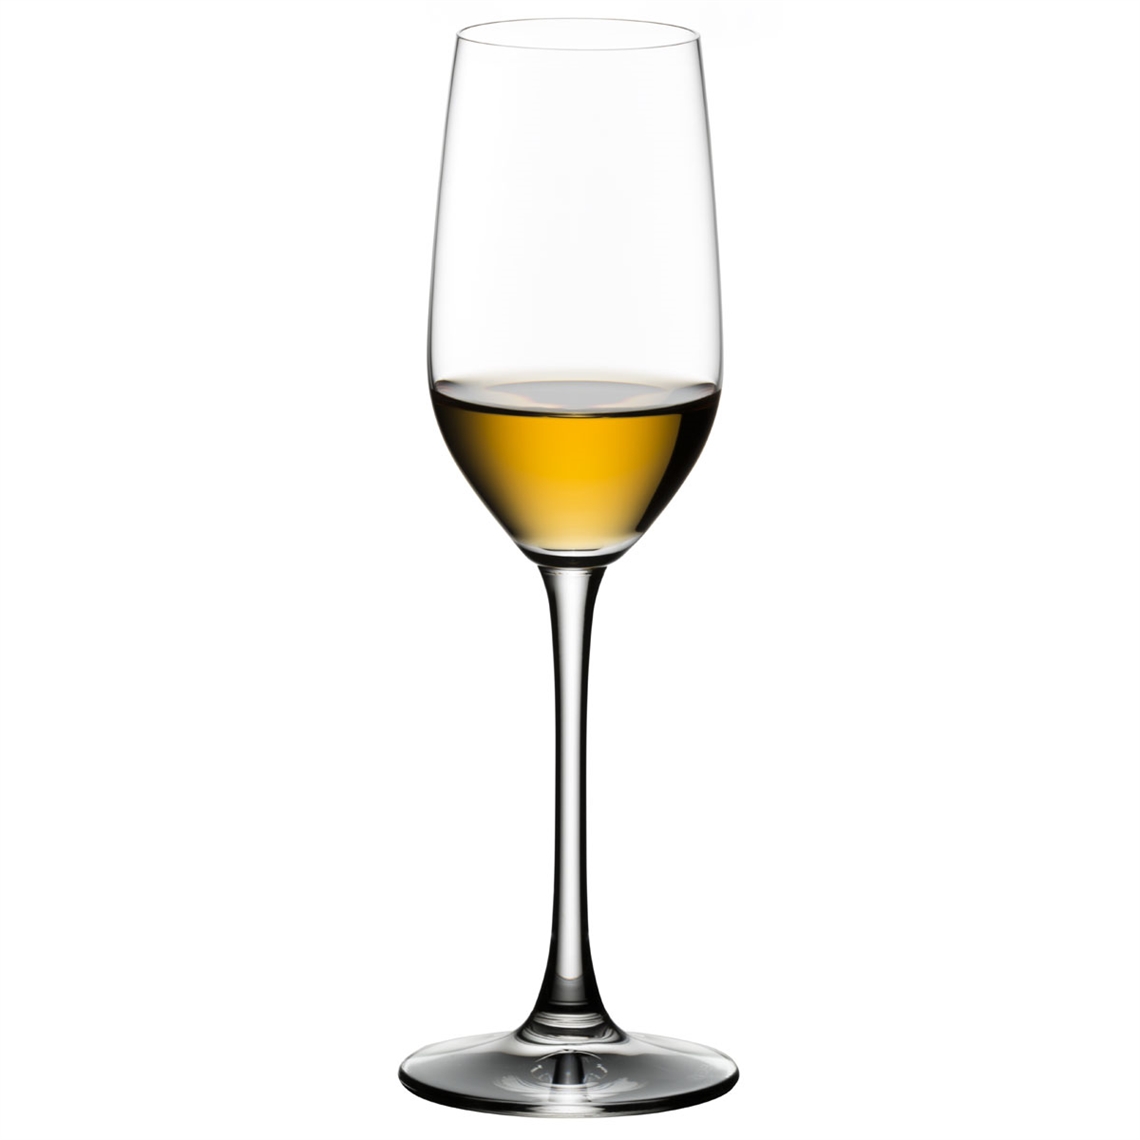 View more brandy / cognac glasses from our Alternative Spirit Glasses range